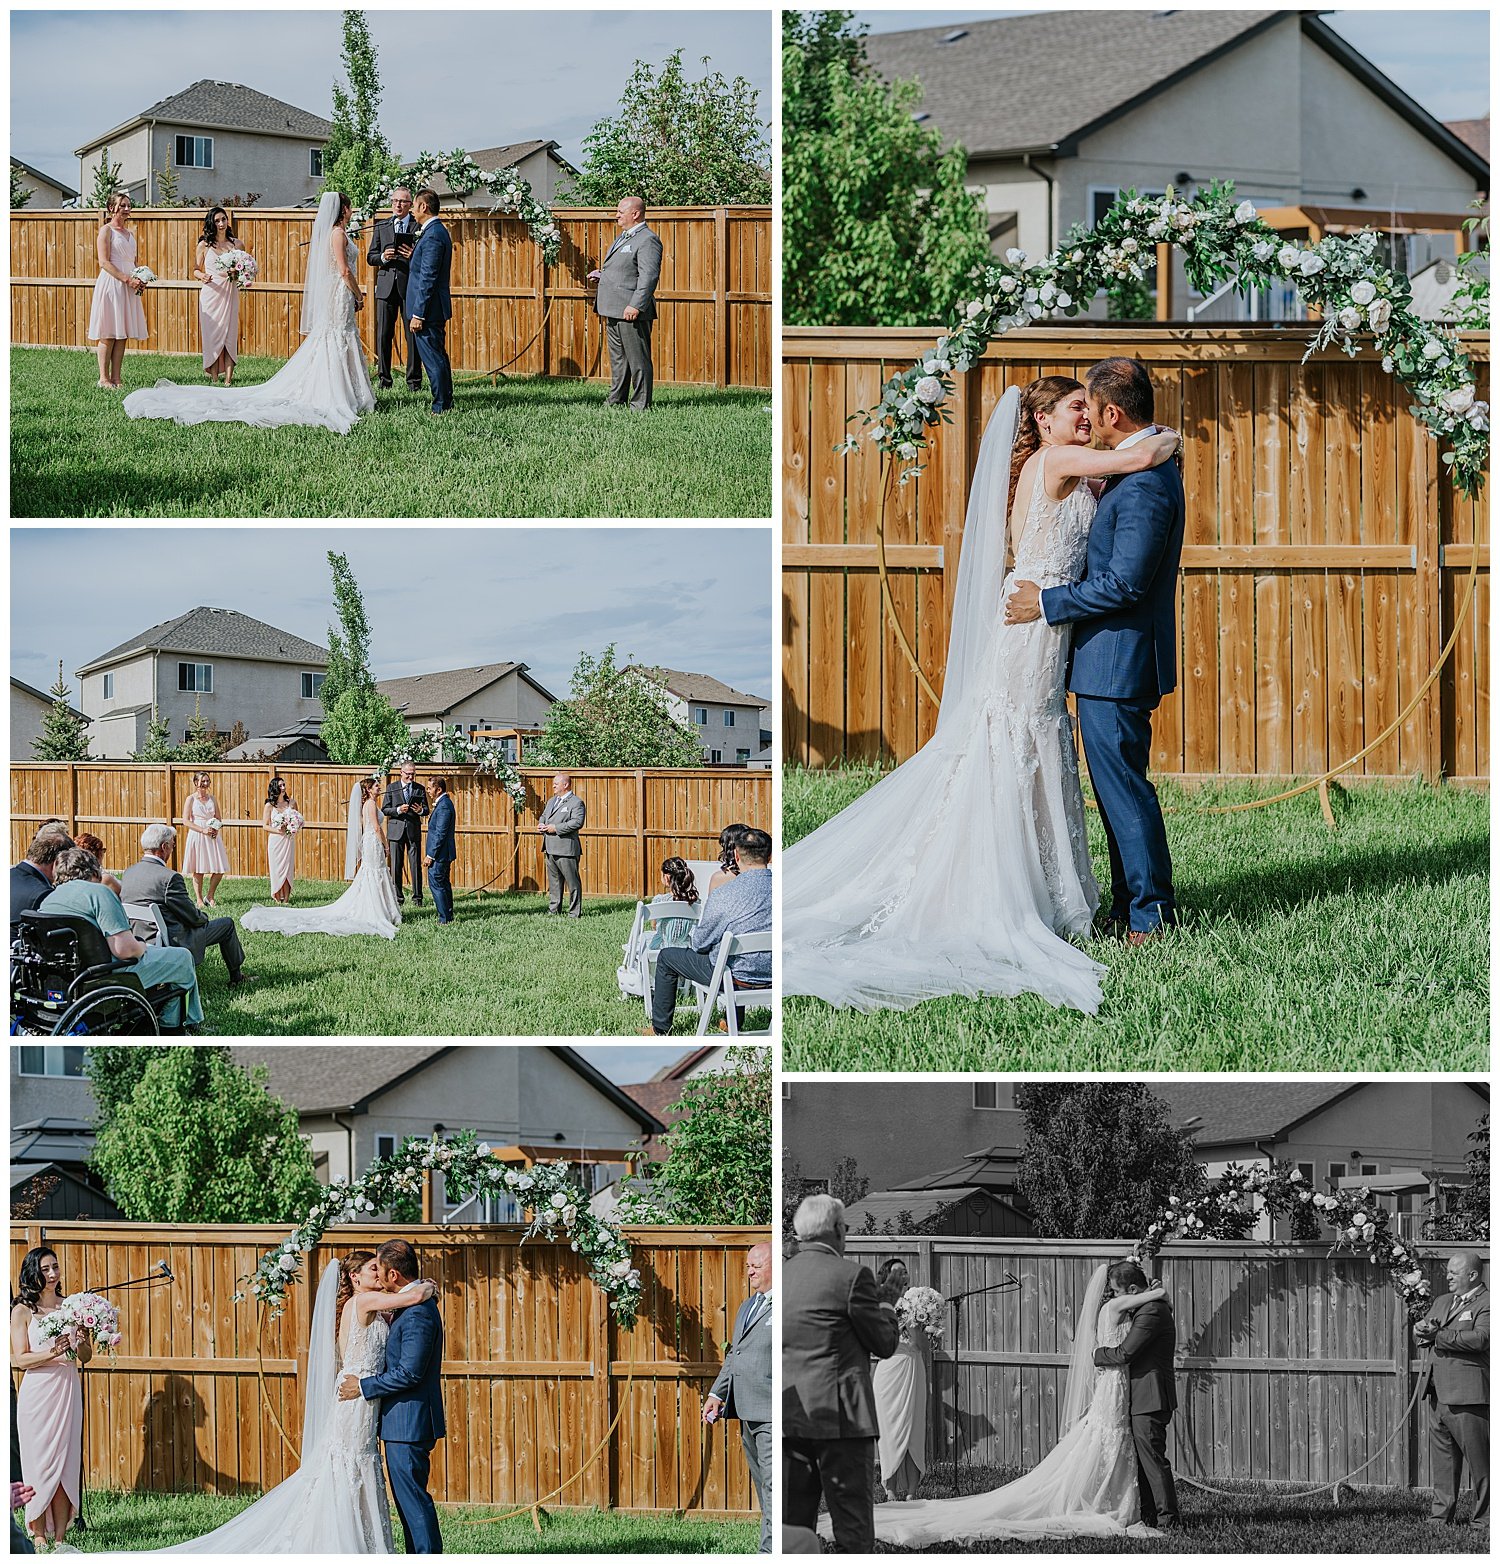 Carrie & Rolando's Intimate Backyard Wedding : Trappist Monastery Provincial Heritage Park Winnipeg Manitoba  21.jpg